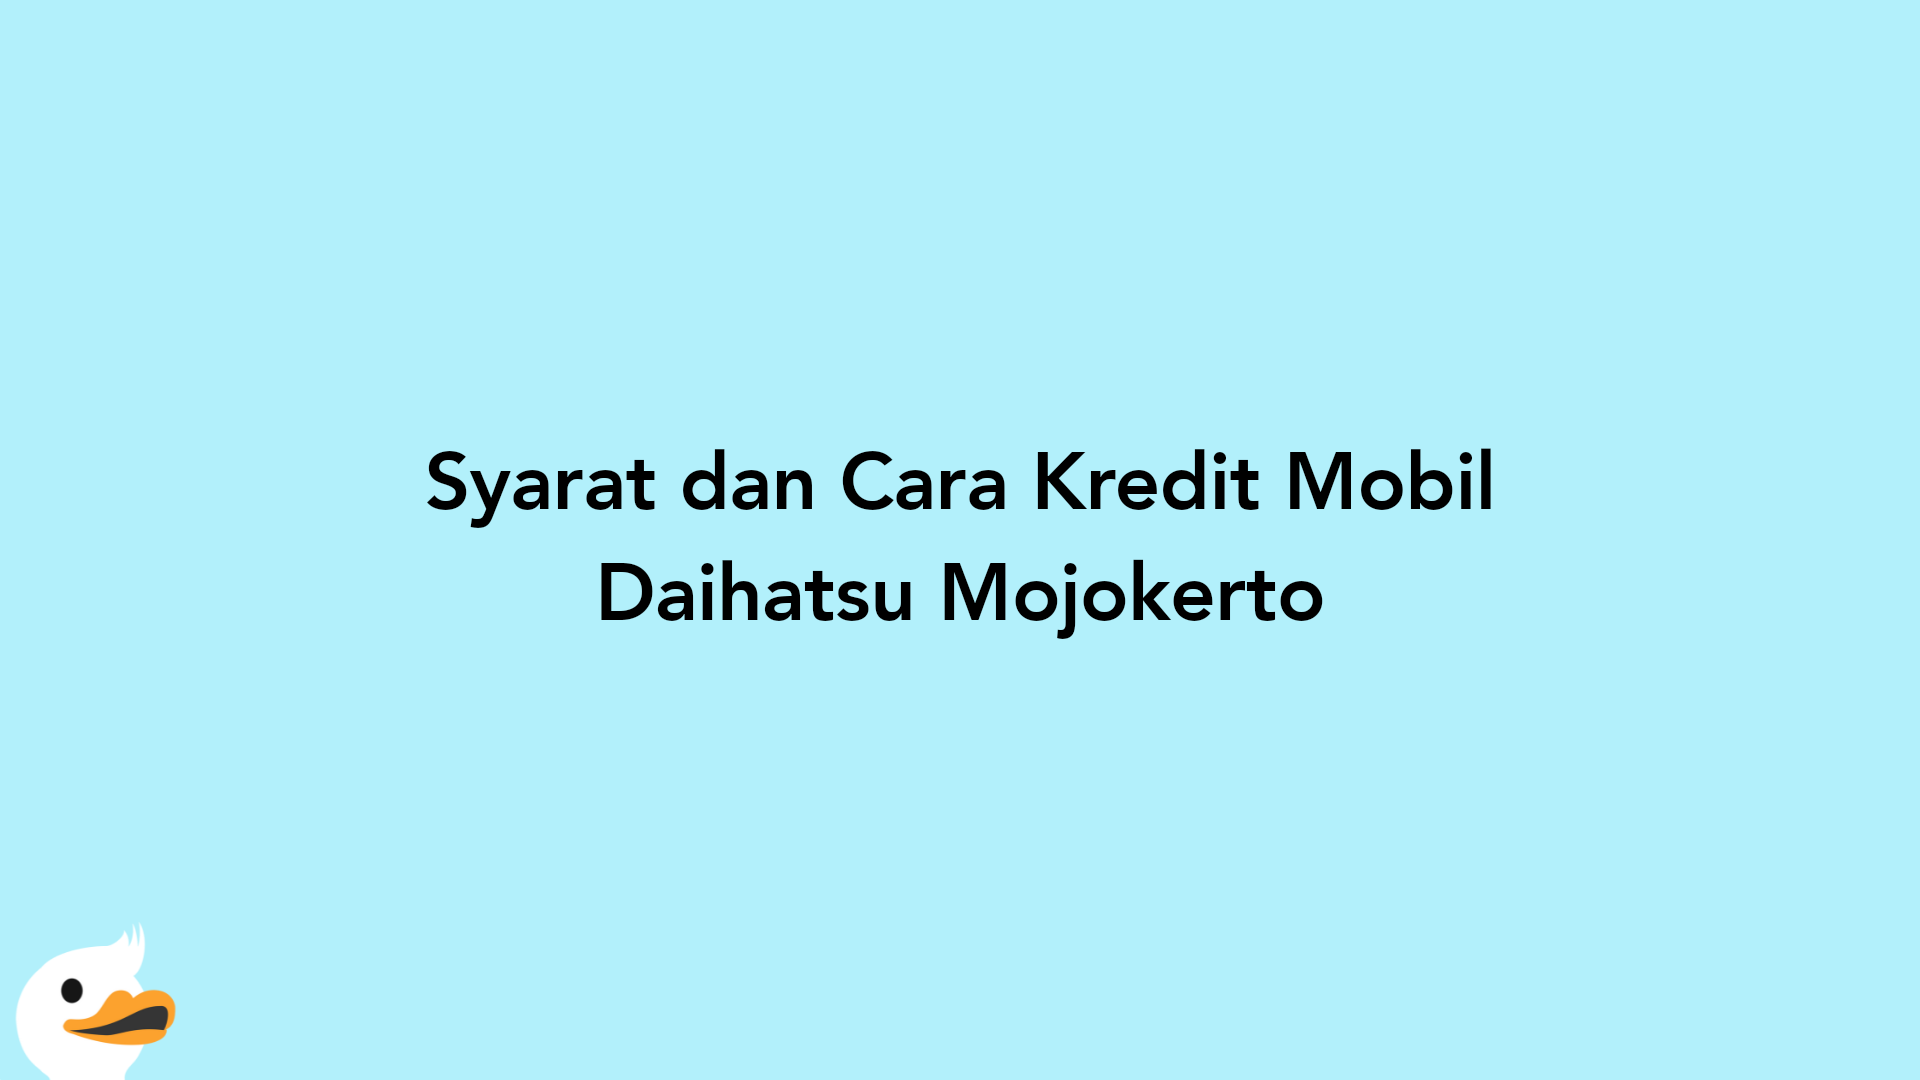 Syarat dan Cara Kredit Mobil Daihatsu Mojokerto